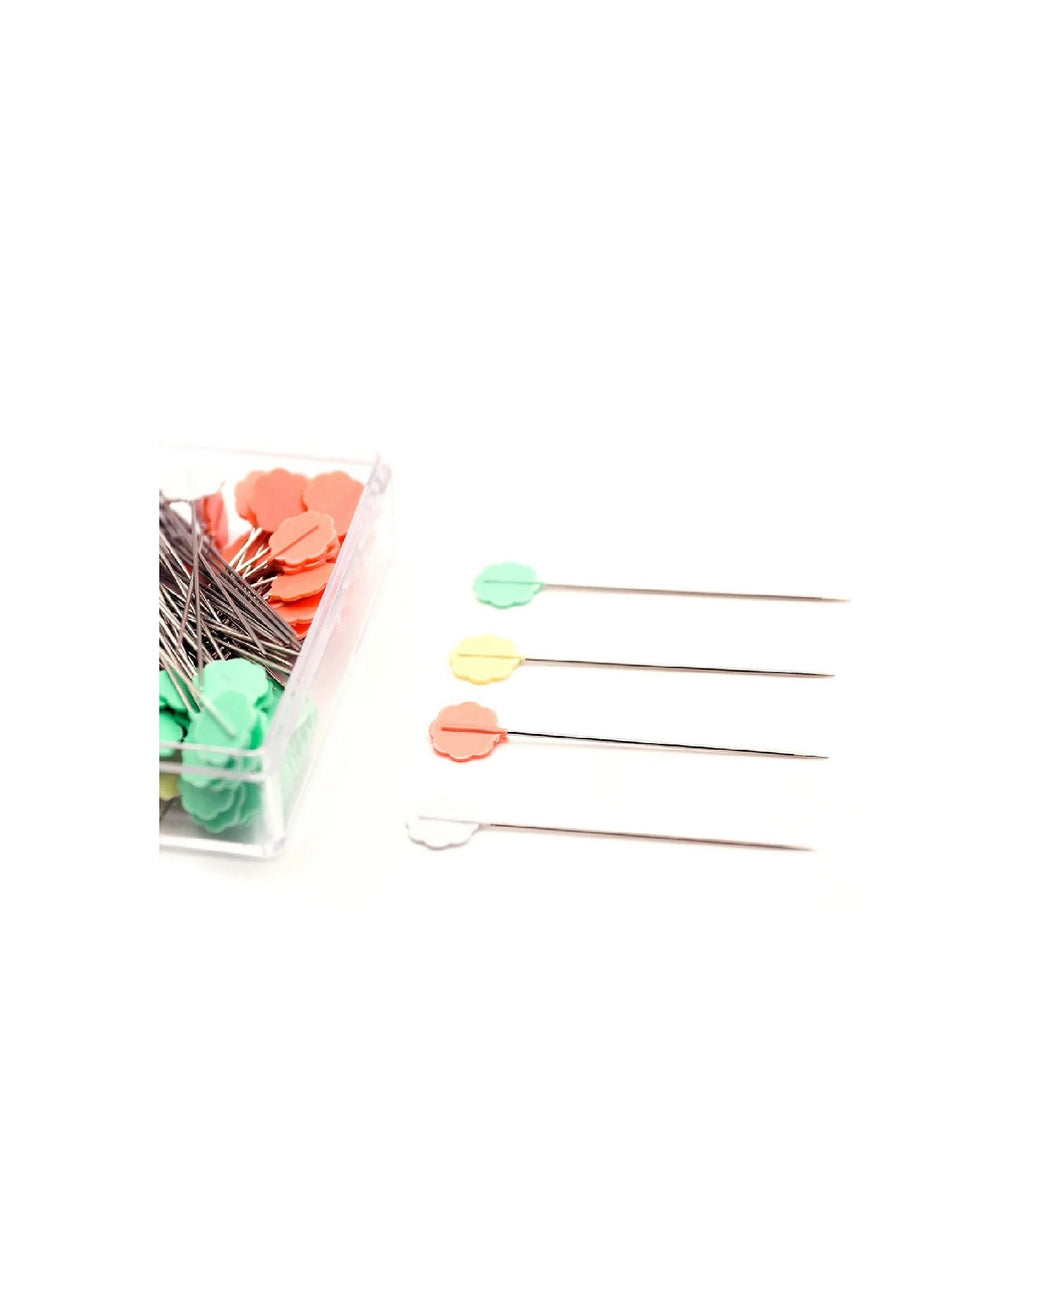 Flower Head Pins Boxed (54mm) - Zipper and Thread